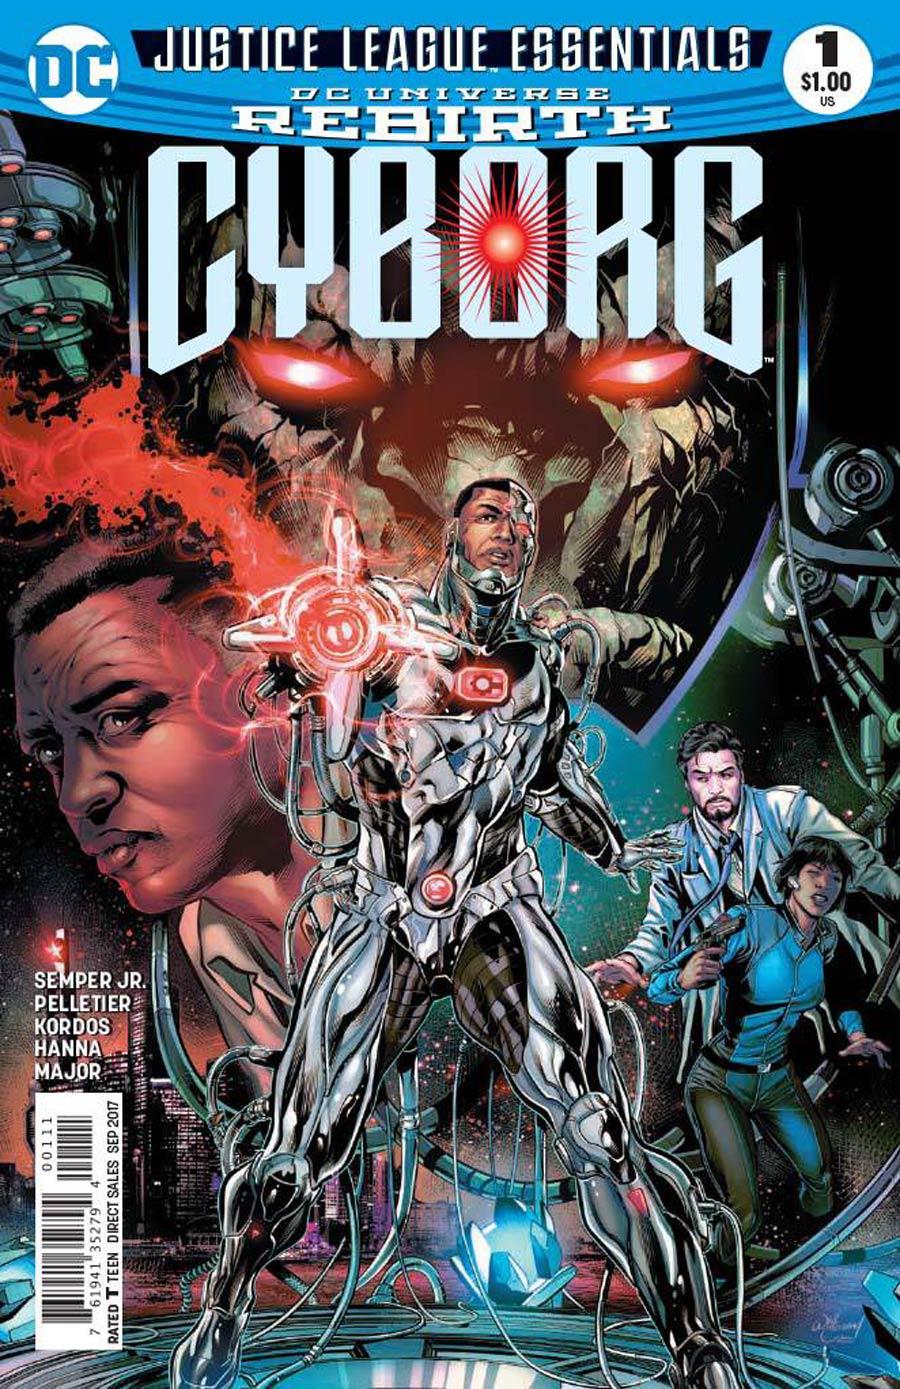 DC Justice League Essentials Cyborg Vol. 1 #1